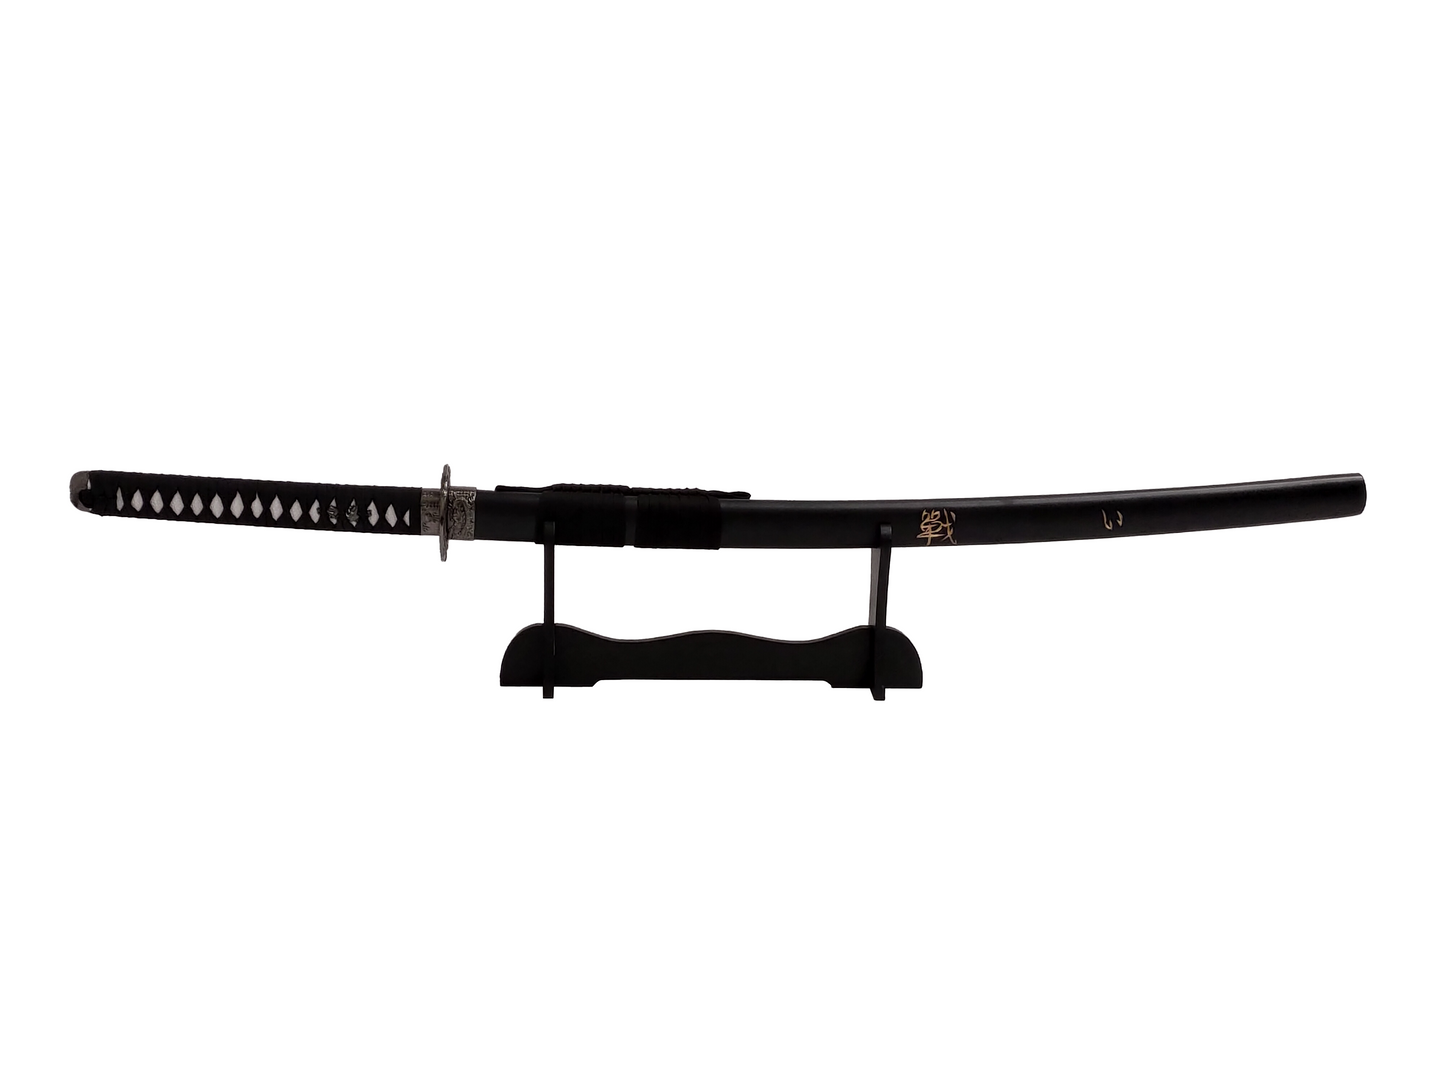 THE LAST SAMURAI - BATTLE KATANA SWORD